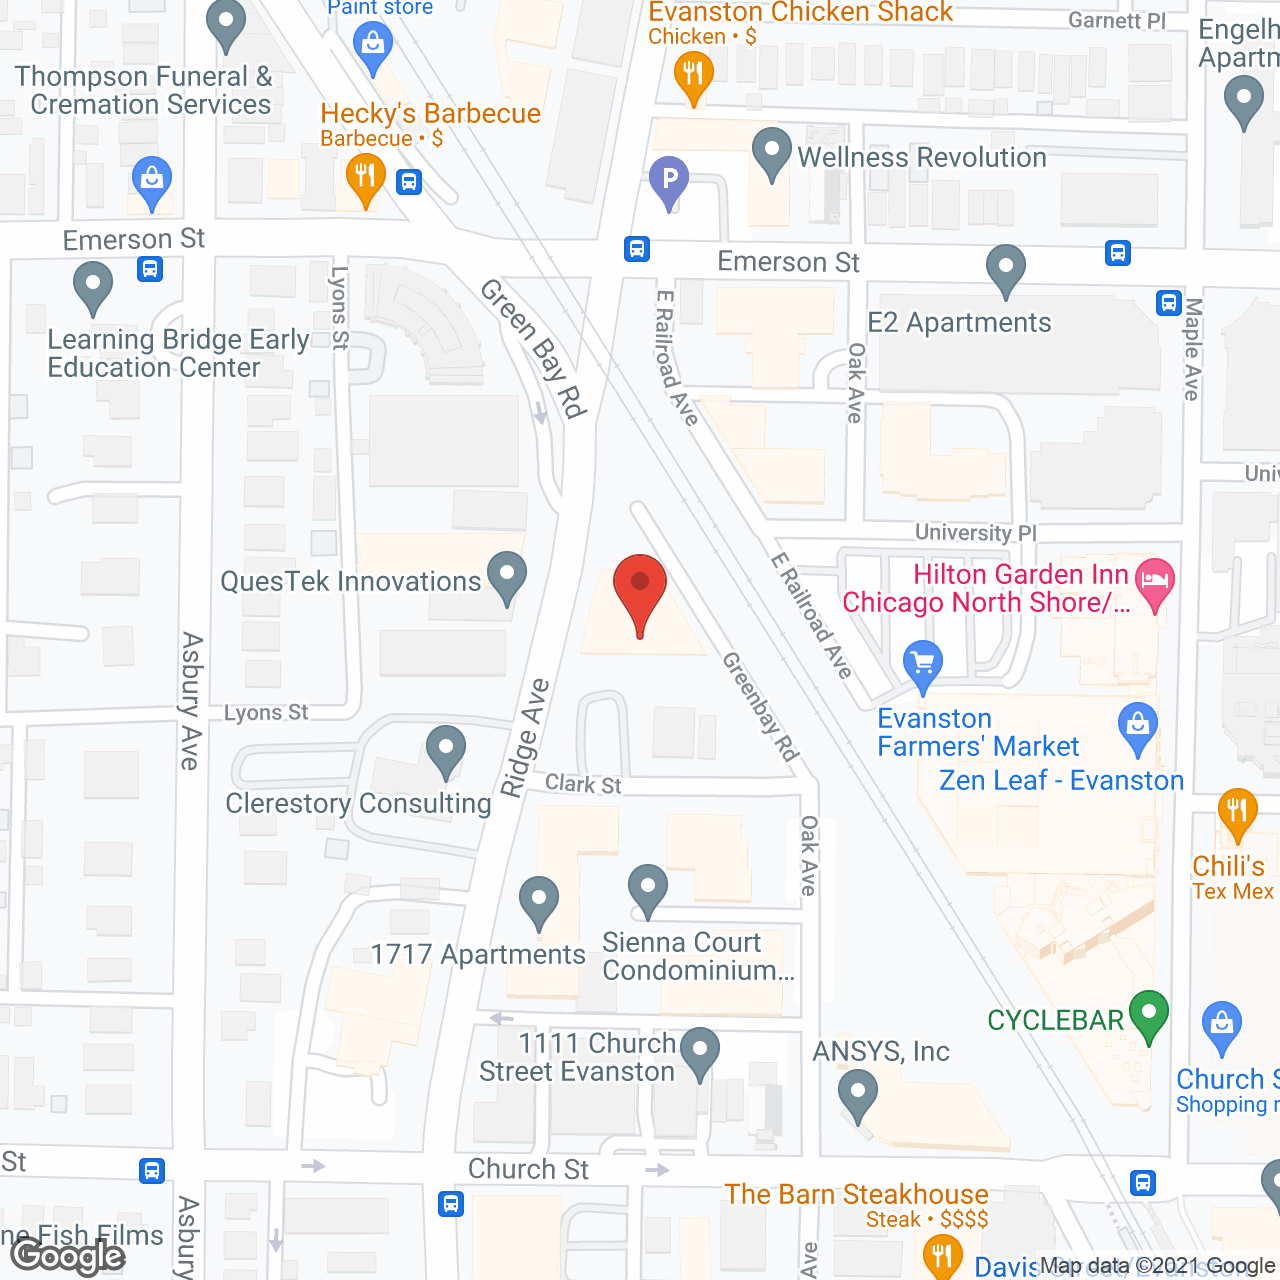 Trulee Evanston in google map